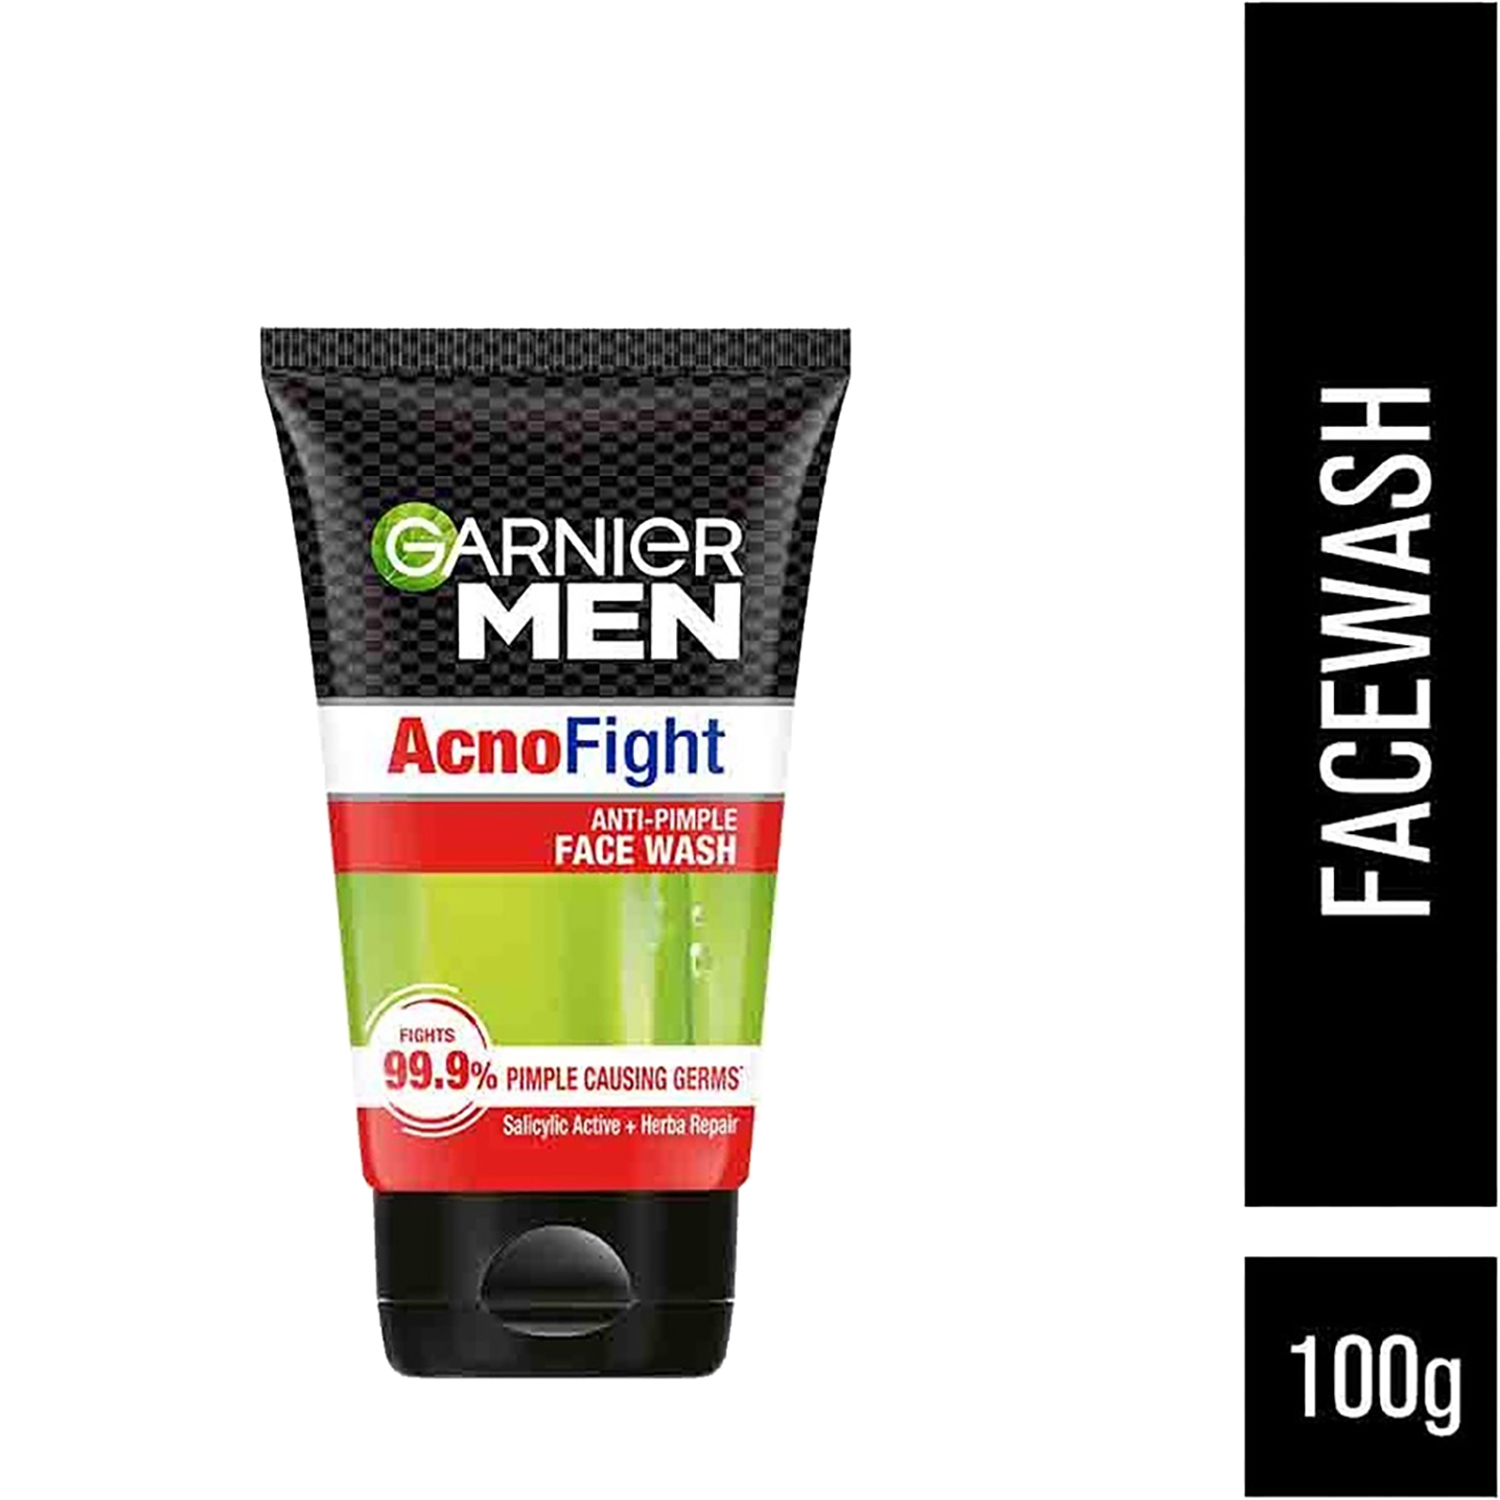 Garnier Men Acno Fight Anti-Pimple Face Wash (100g)